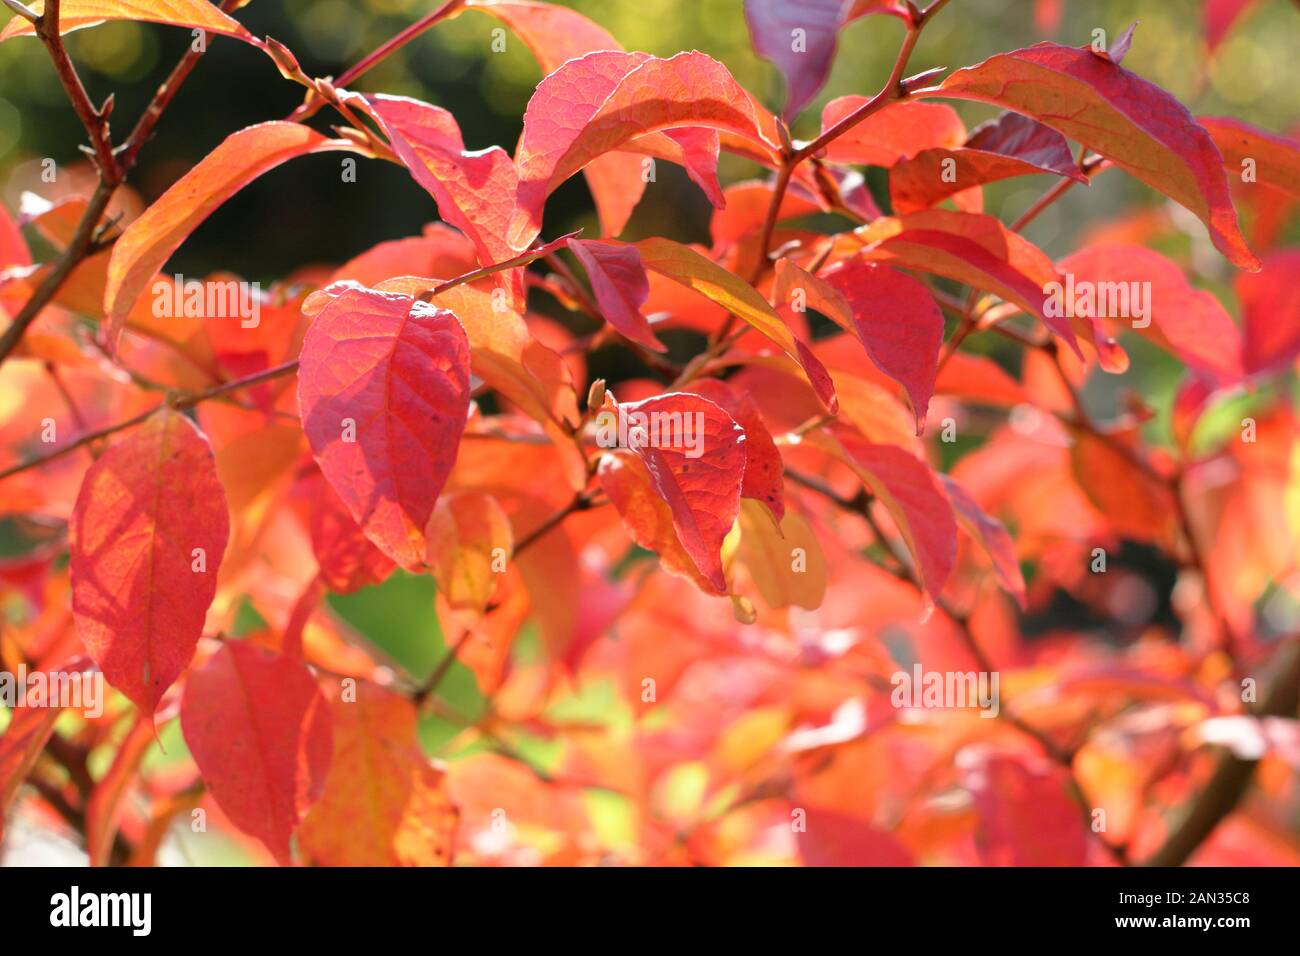 Stewartia pseudocamellia. Deciduous camellia tree displaying orange and red autumn leaves. UK. AGM Stock Photo